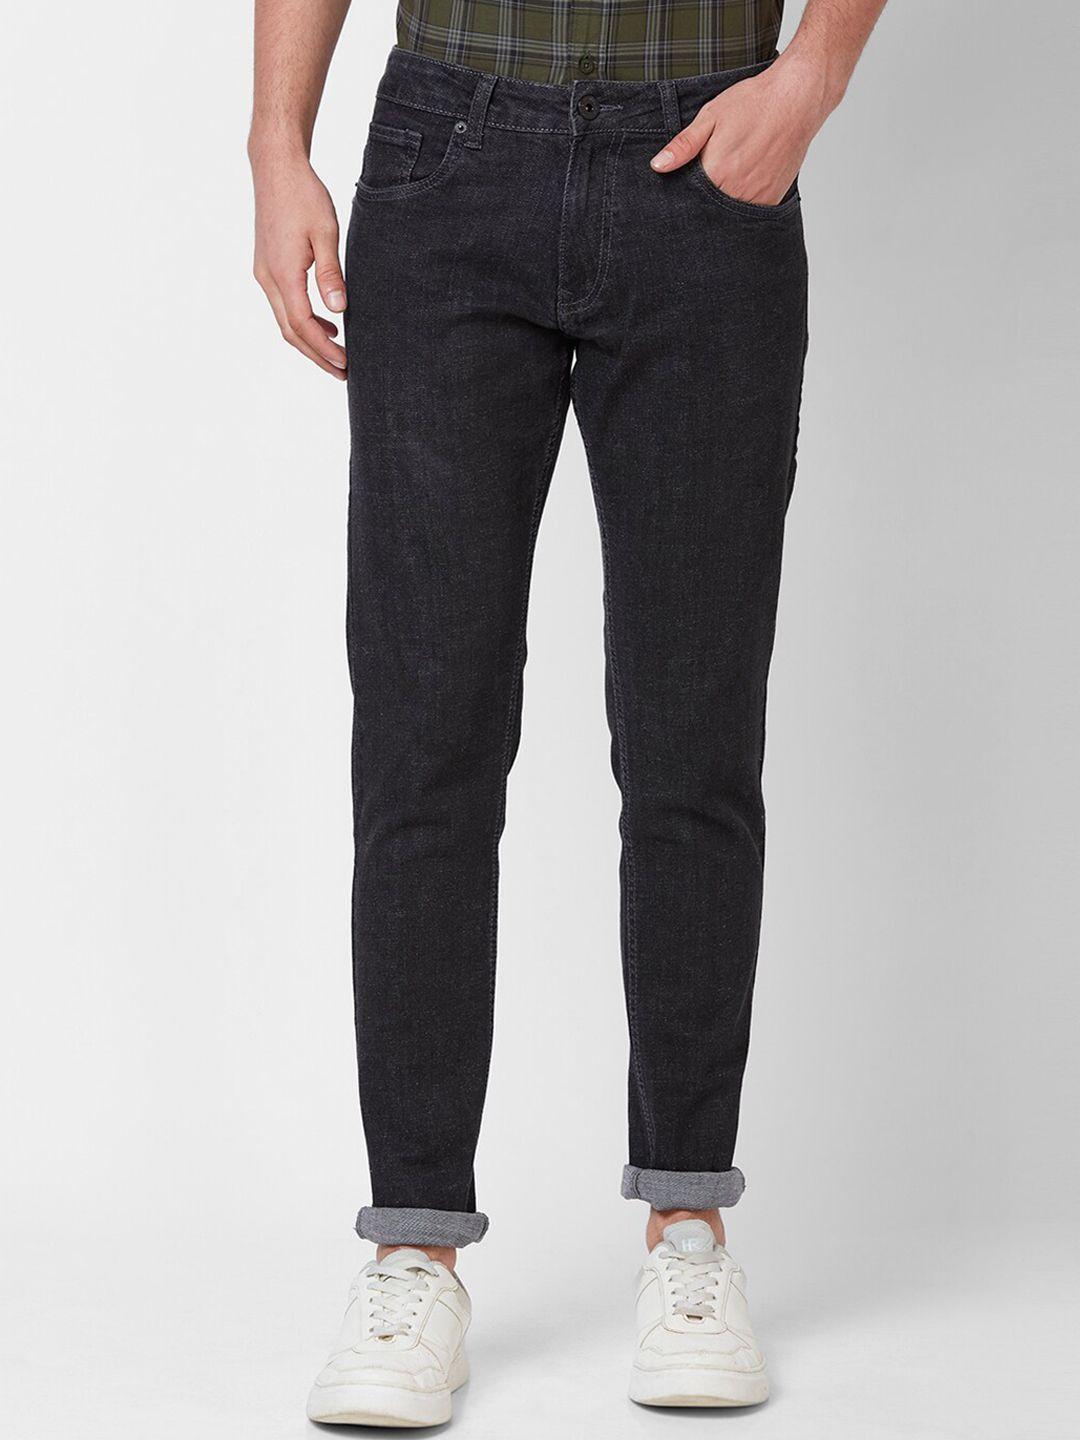 kenneth-cole-men-black-slim-fit-stretchable-jeans